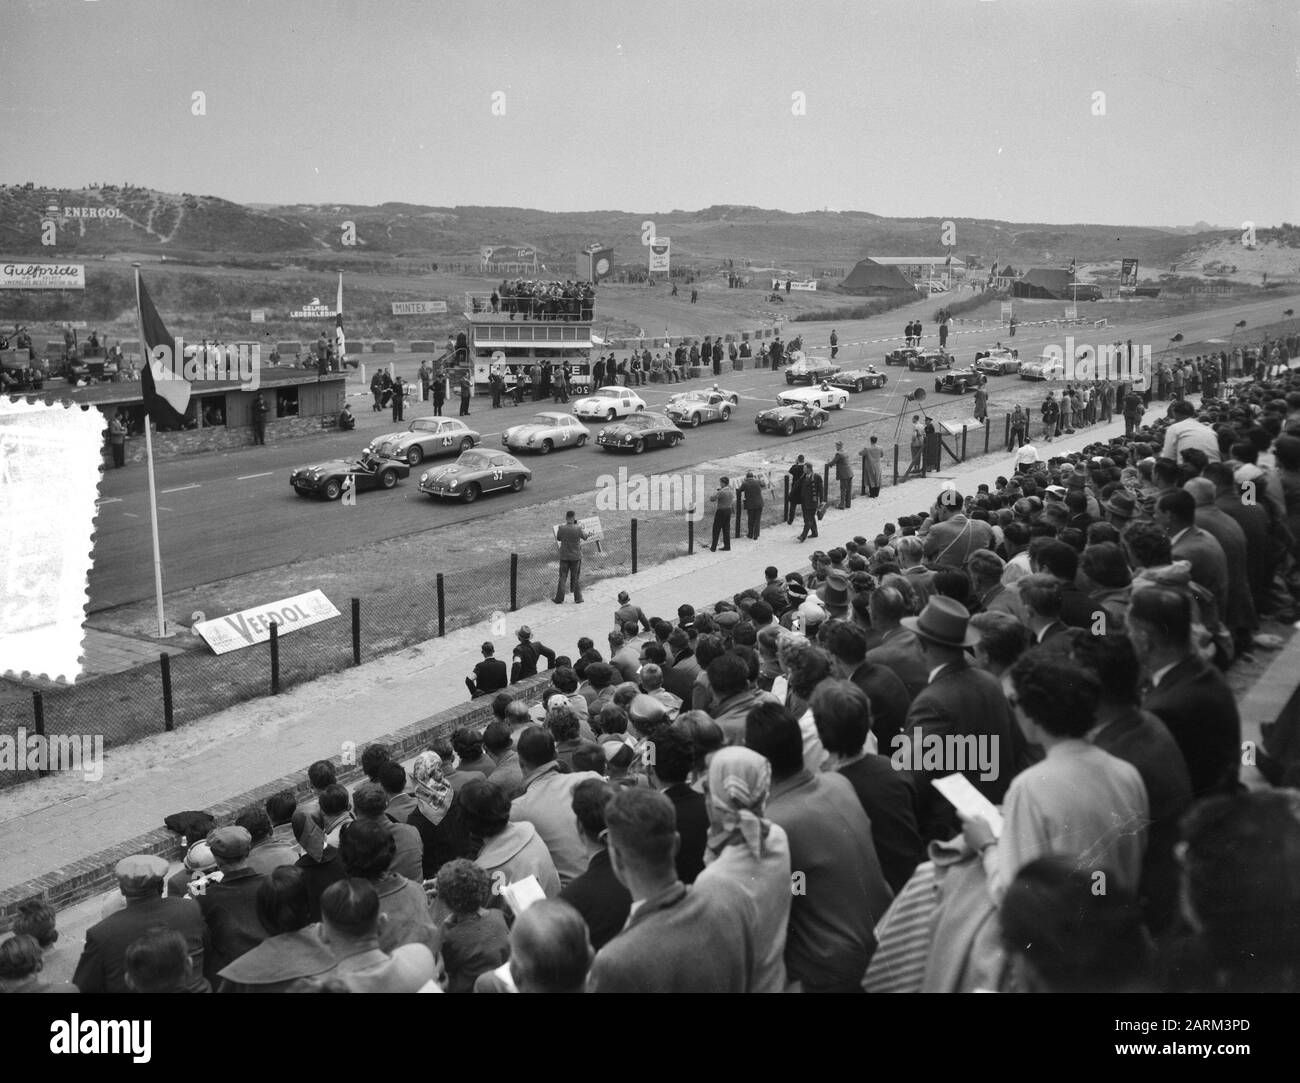 Sportwagenraces Zandvoort Date: 21 May 1956 Location: Noord-Holland, Zandvoort Keywords: sportwagen races Stock Photo